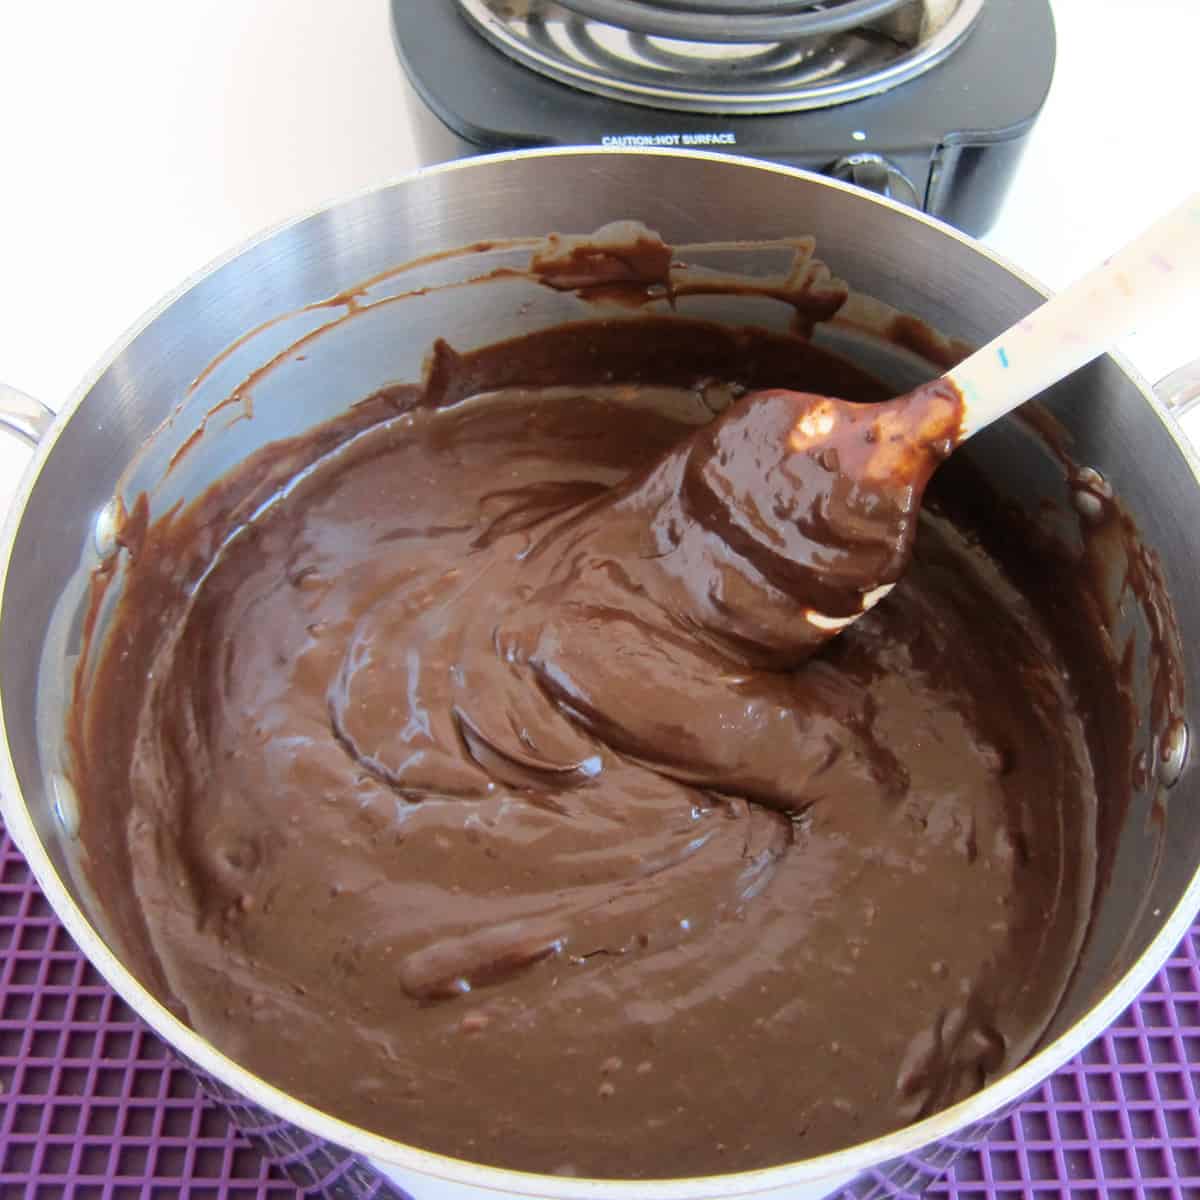 stirring hot chocolate fudge in the saucepan until smooth.